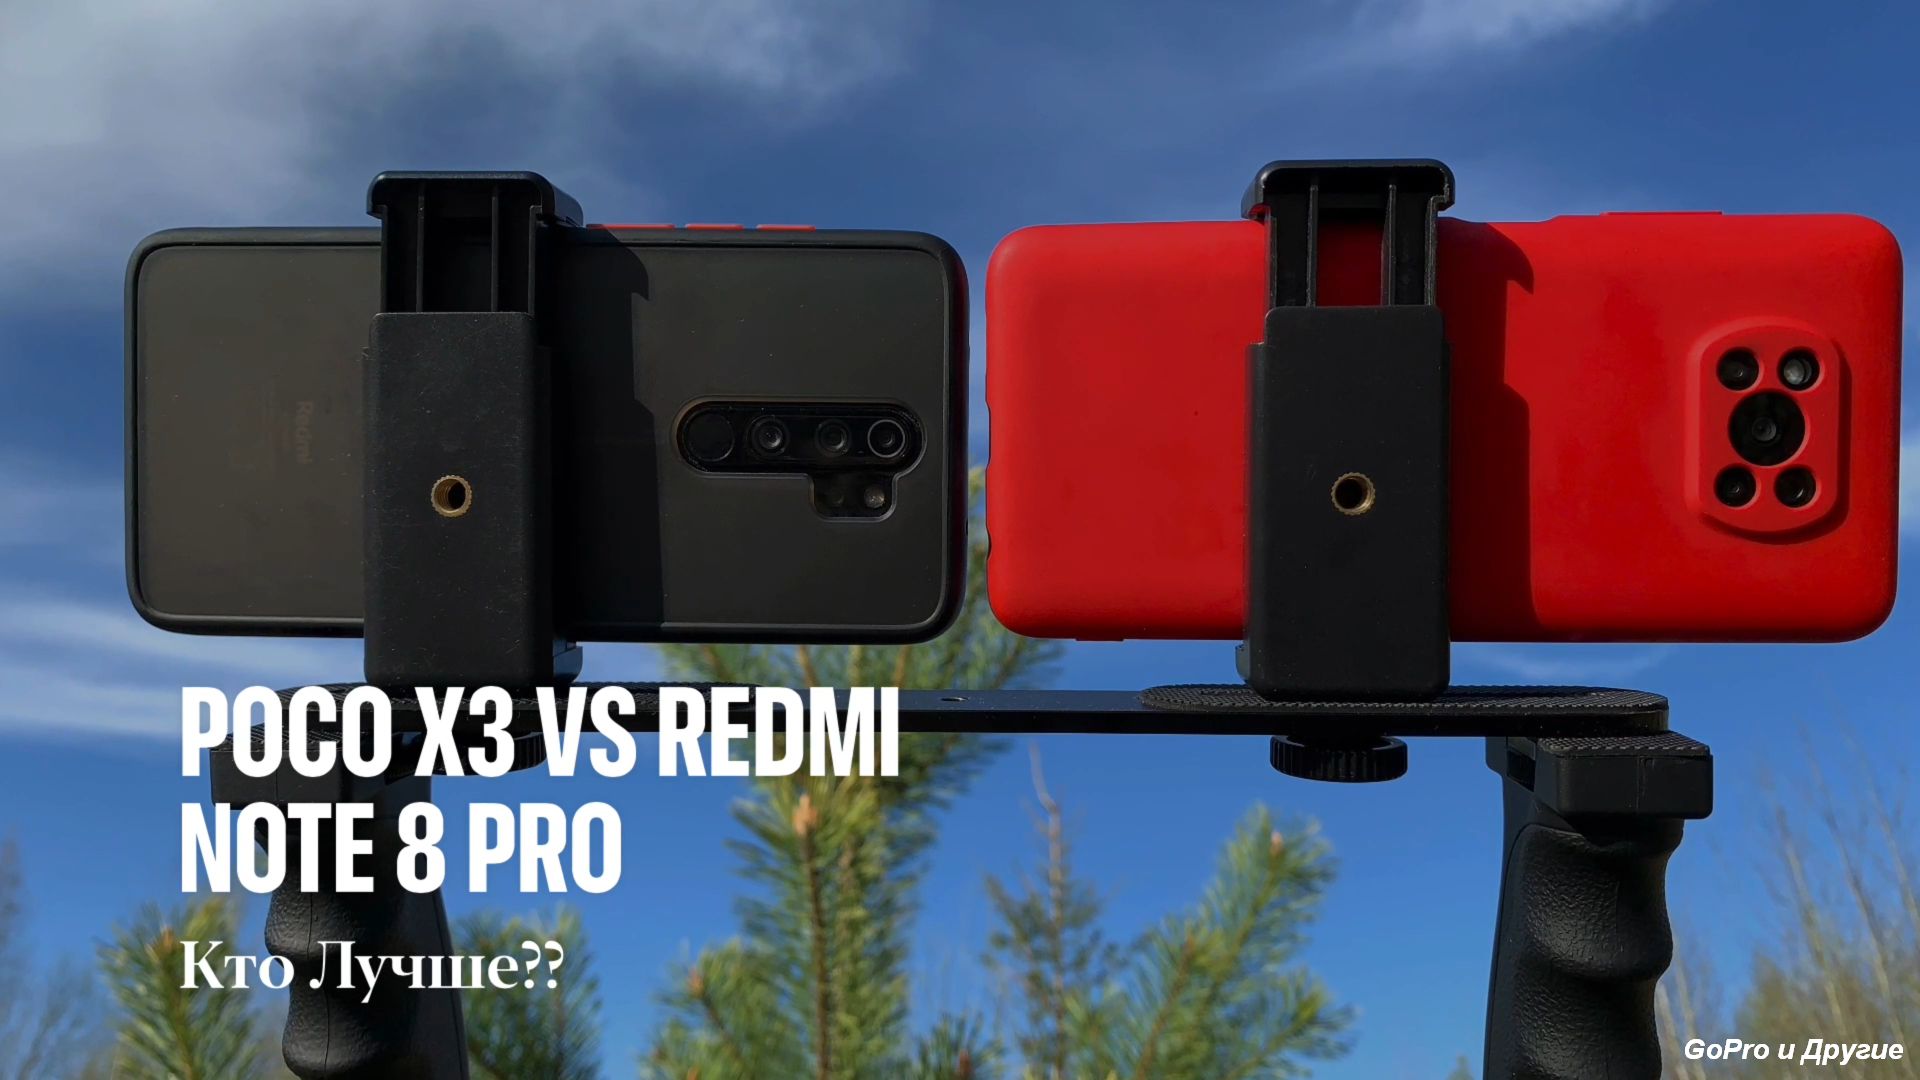 POCO X3 NFC vs Redmi note 8 pro 4k video